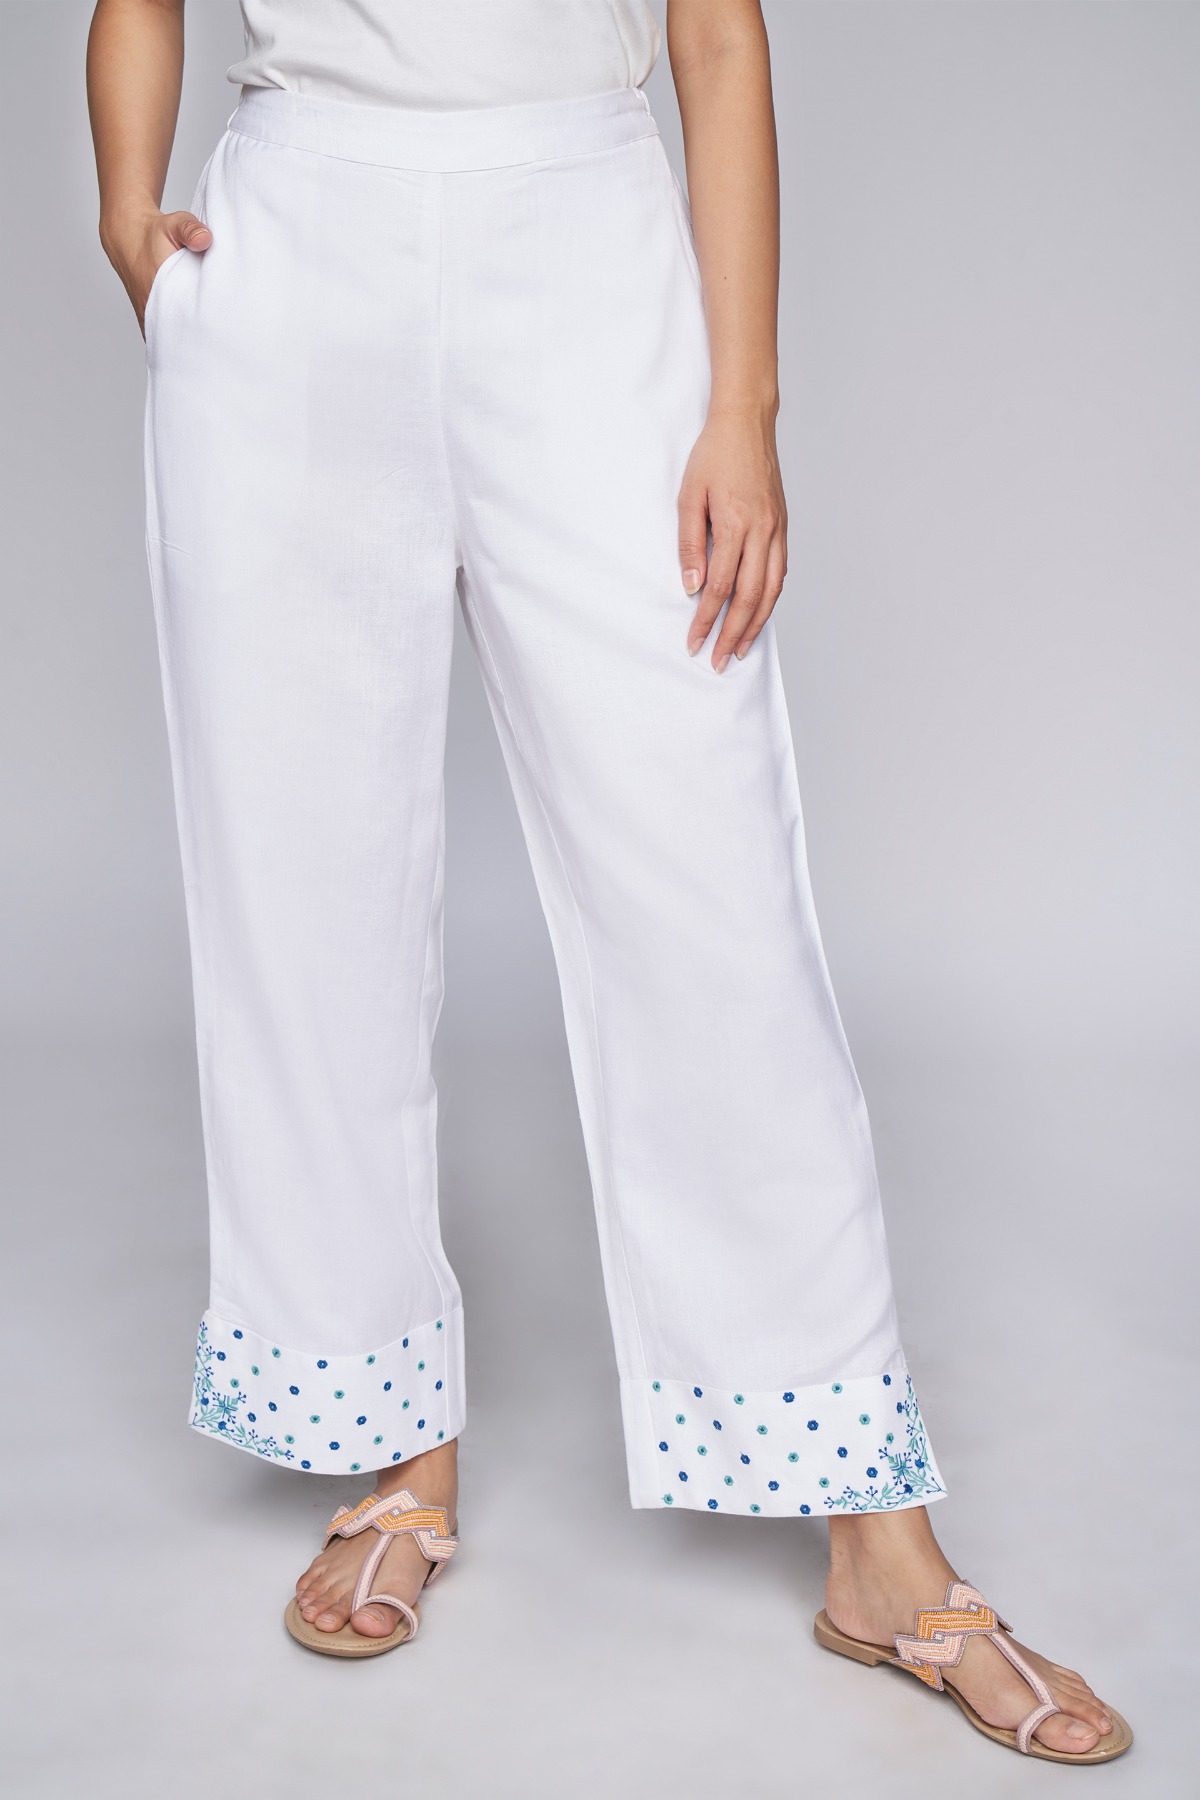 Solid Off-White Straight Pants – Imara